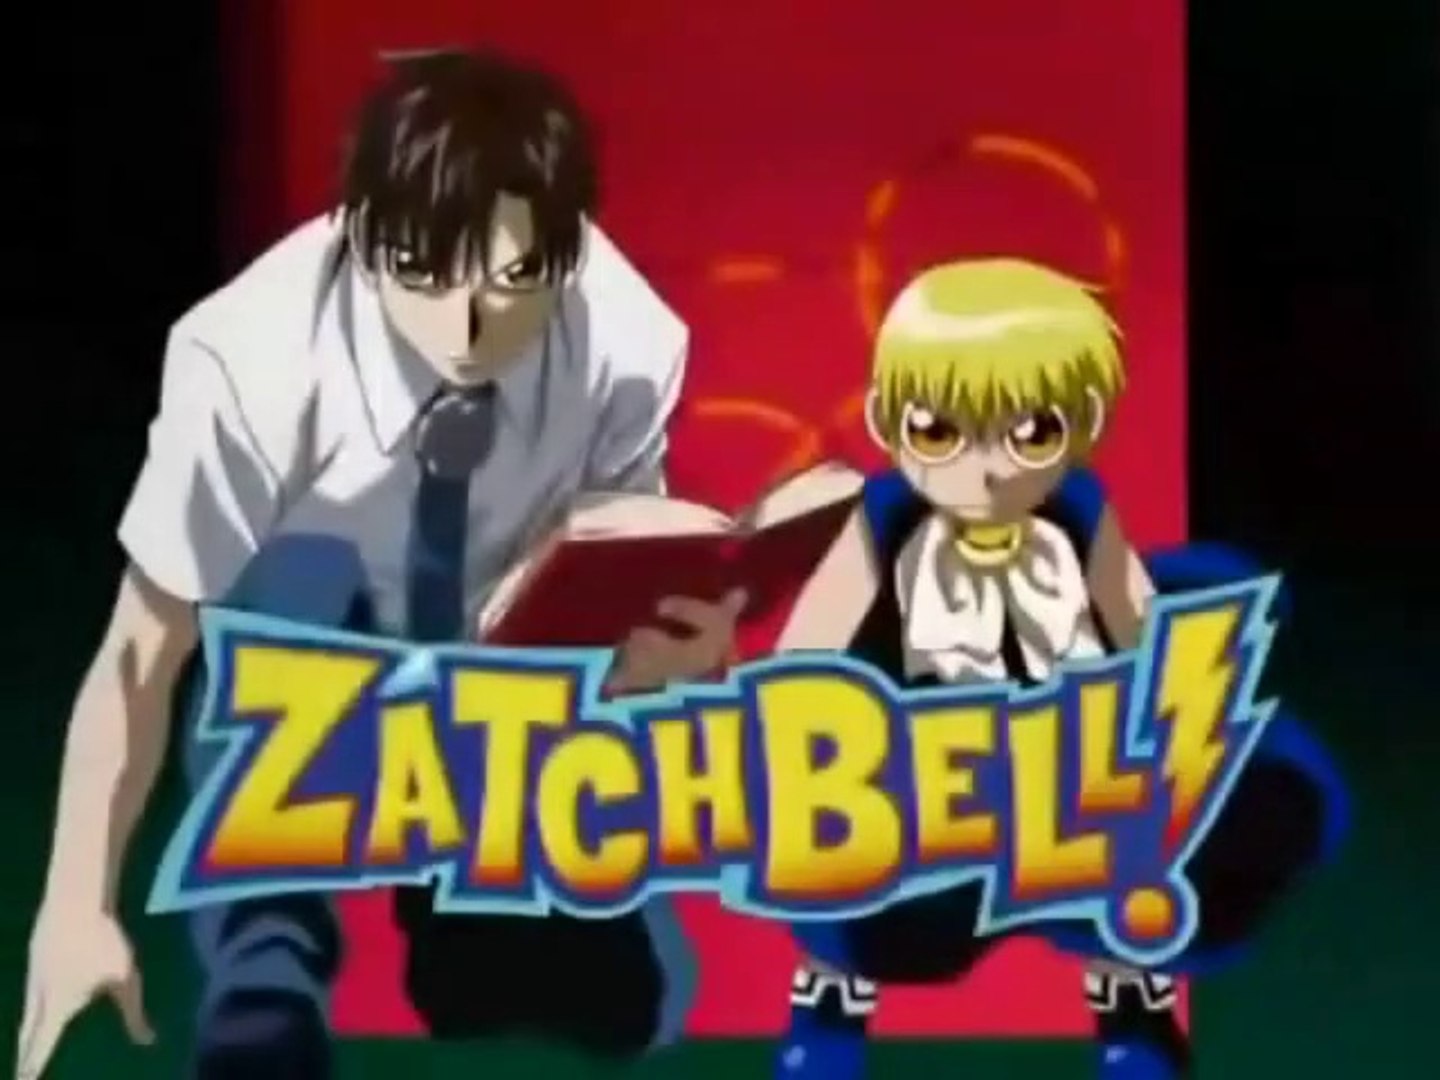 Zatch bell season (1) Episode (1) in hindi - video Dailymotion